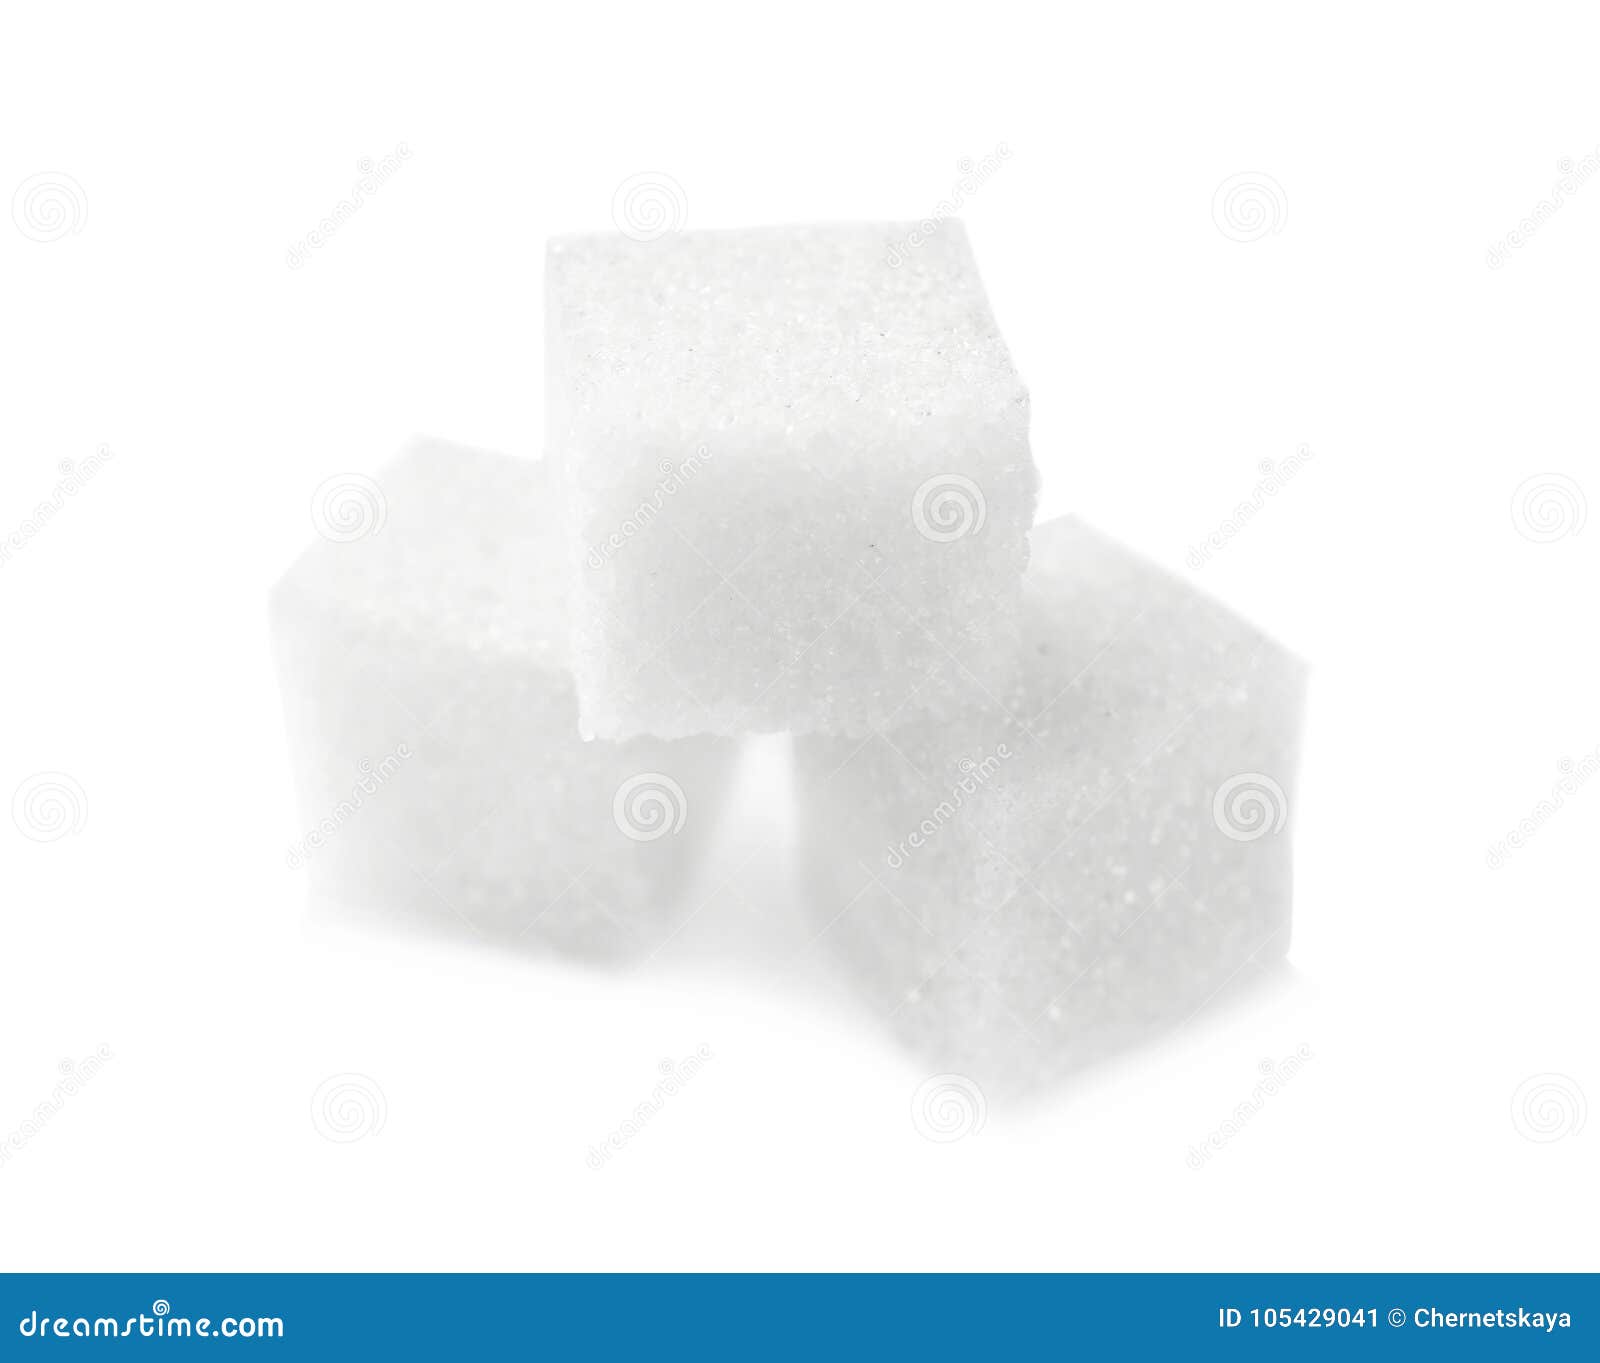 Sugar cubes stock image. Image of portion, diabetes - 105429041